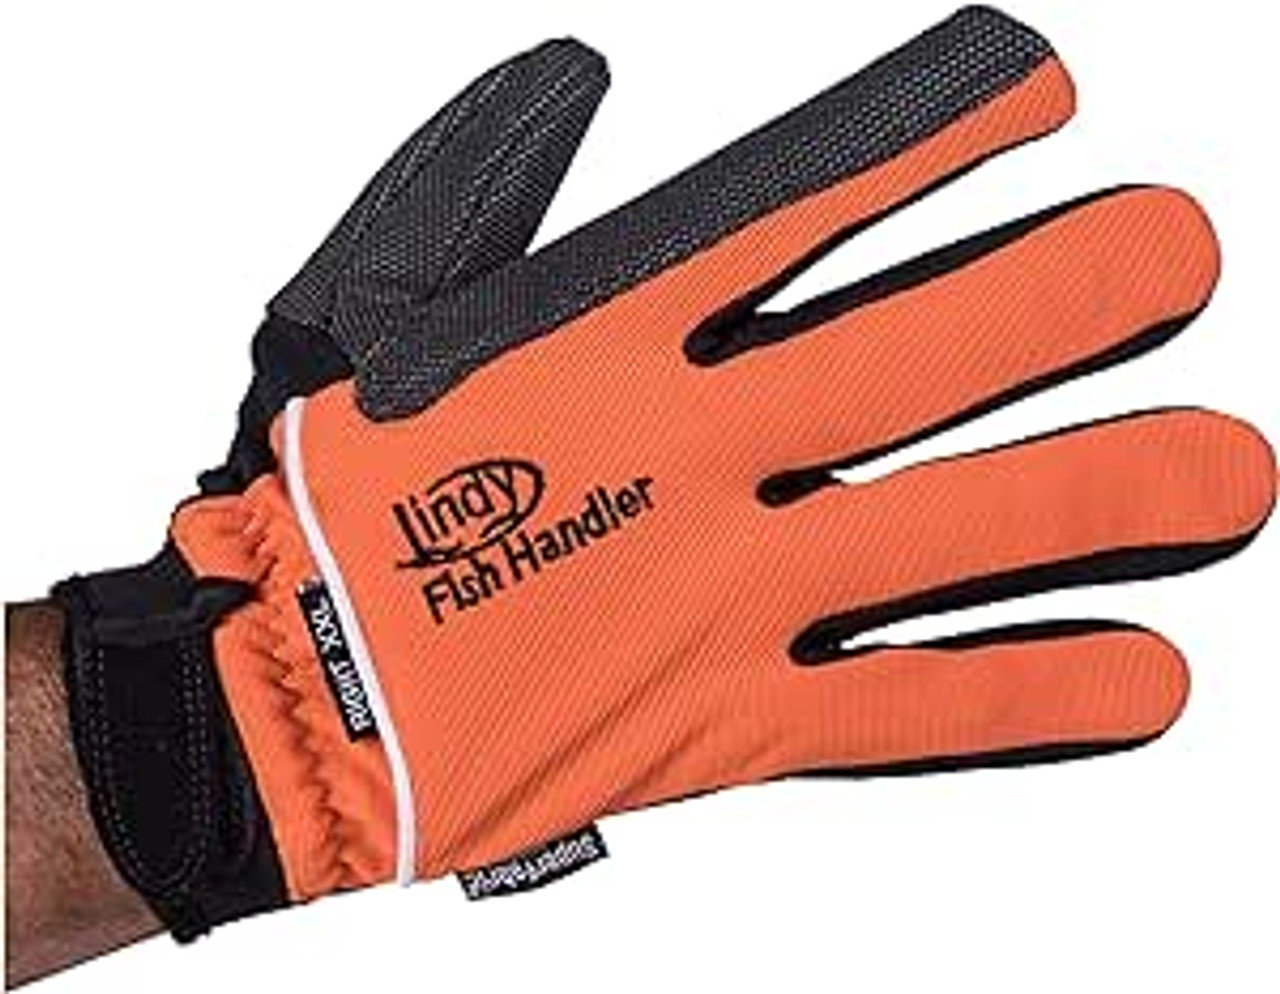 Lindy Fish Handling Glove, RH Medium